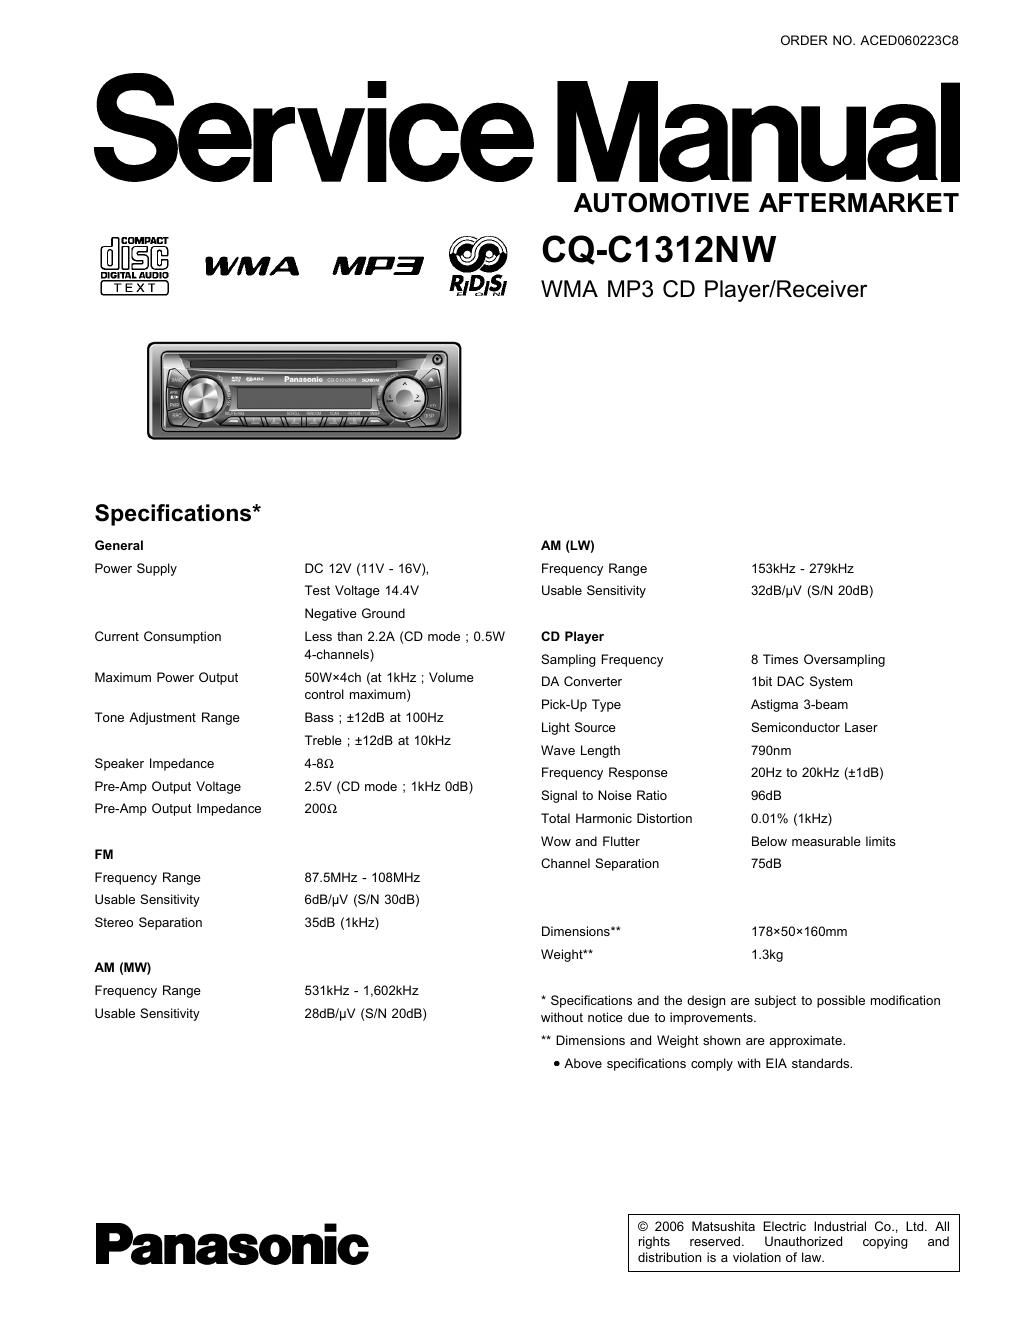 panasonic cq c 1312 nw service manual